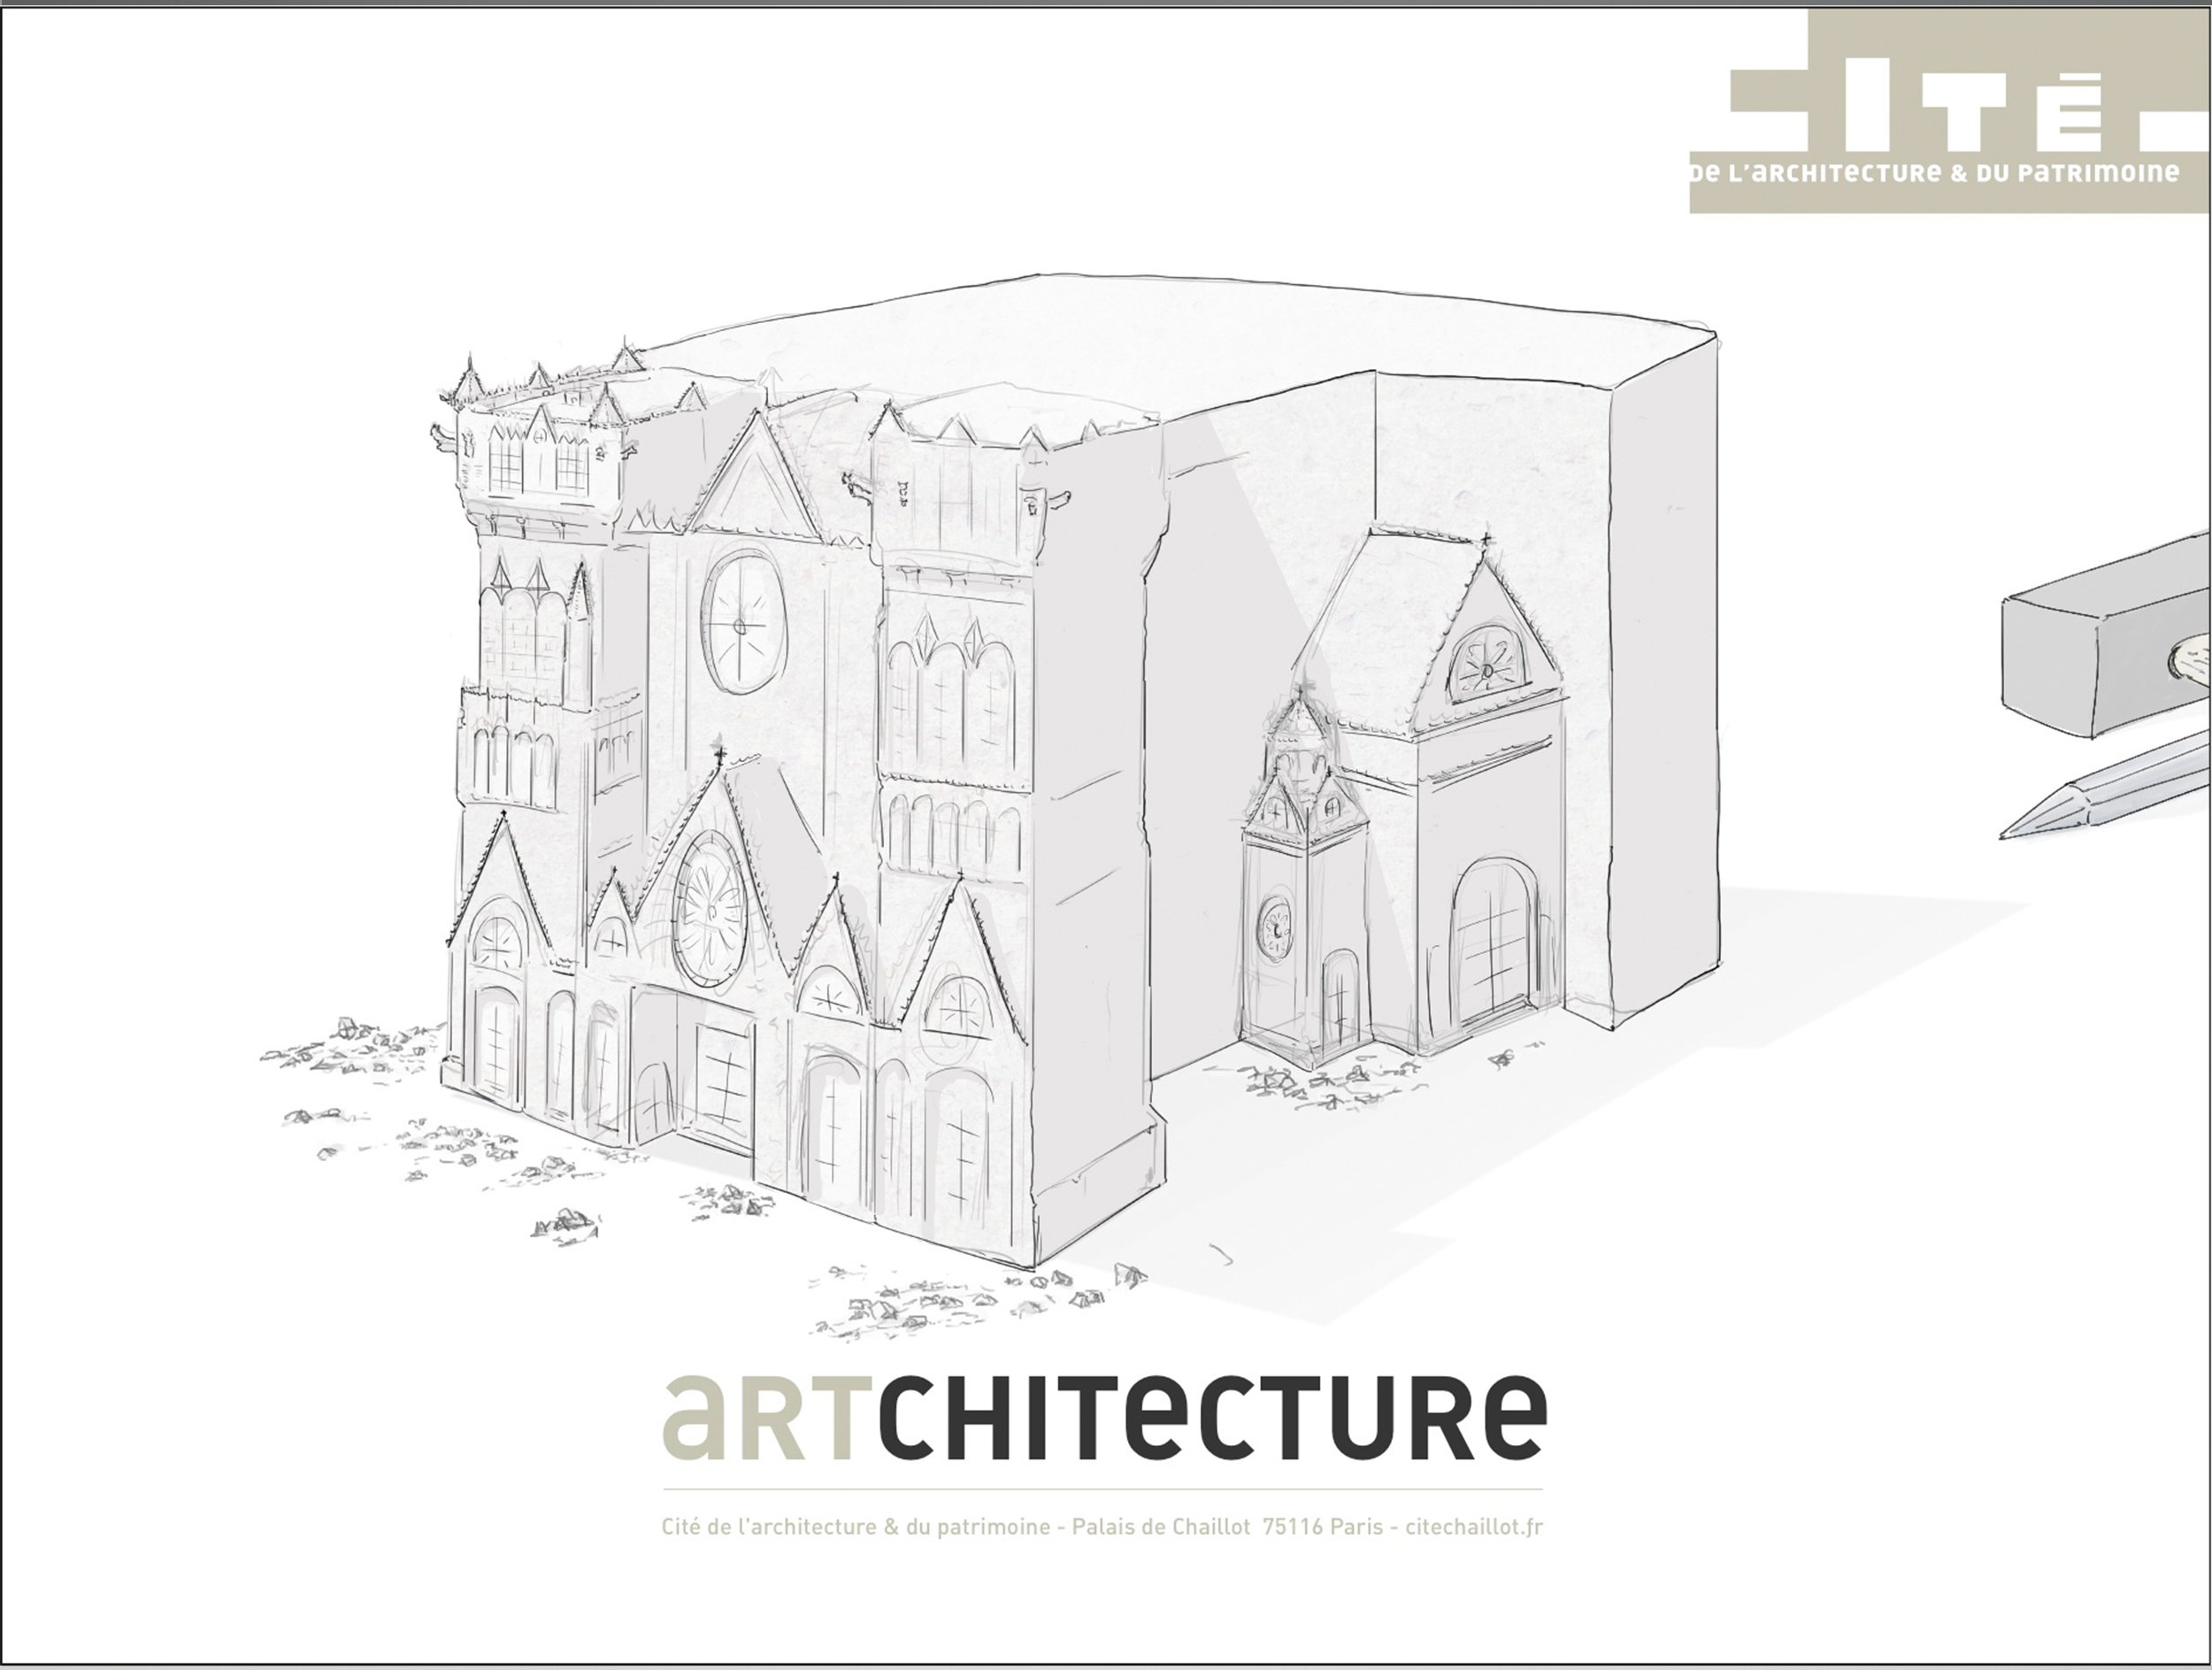 Architecture Museum Paris_Stone_sRGB2500_Layout.jpg